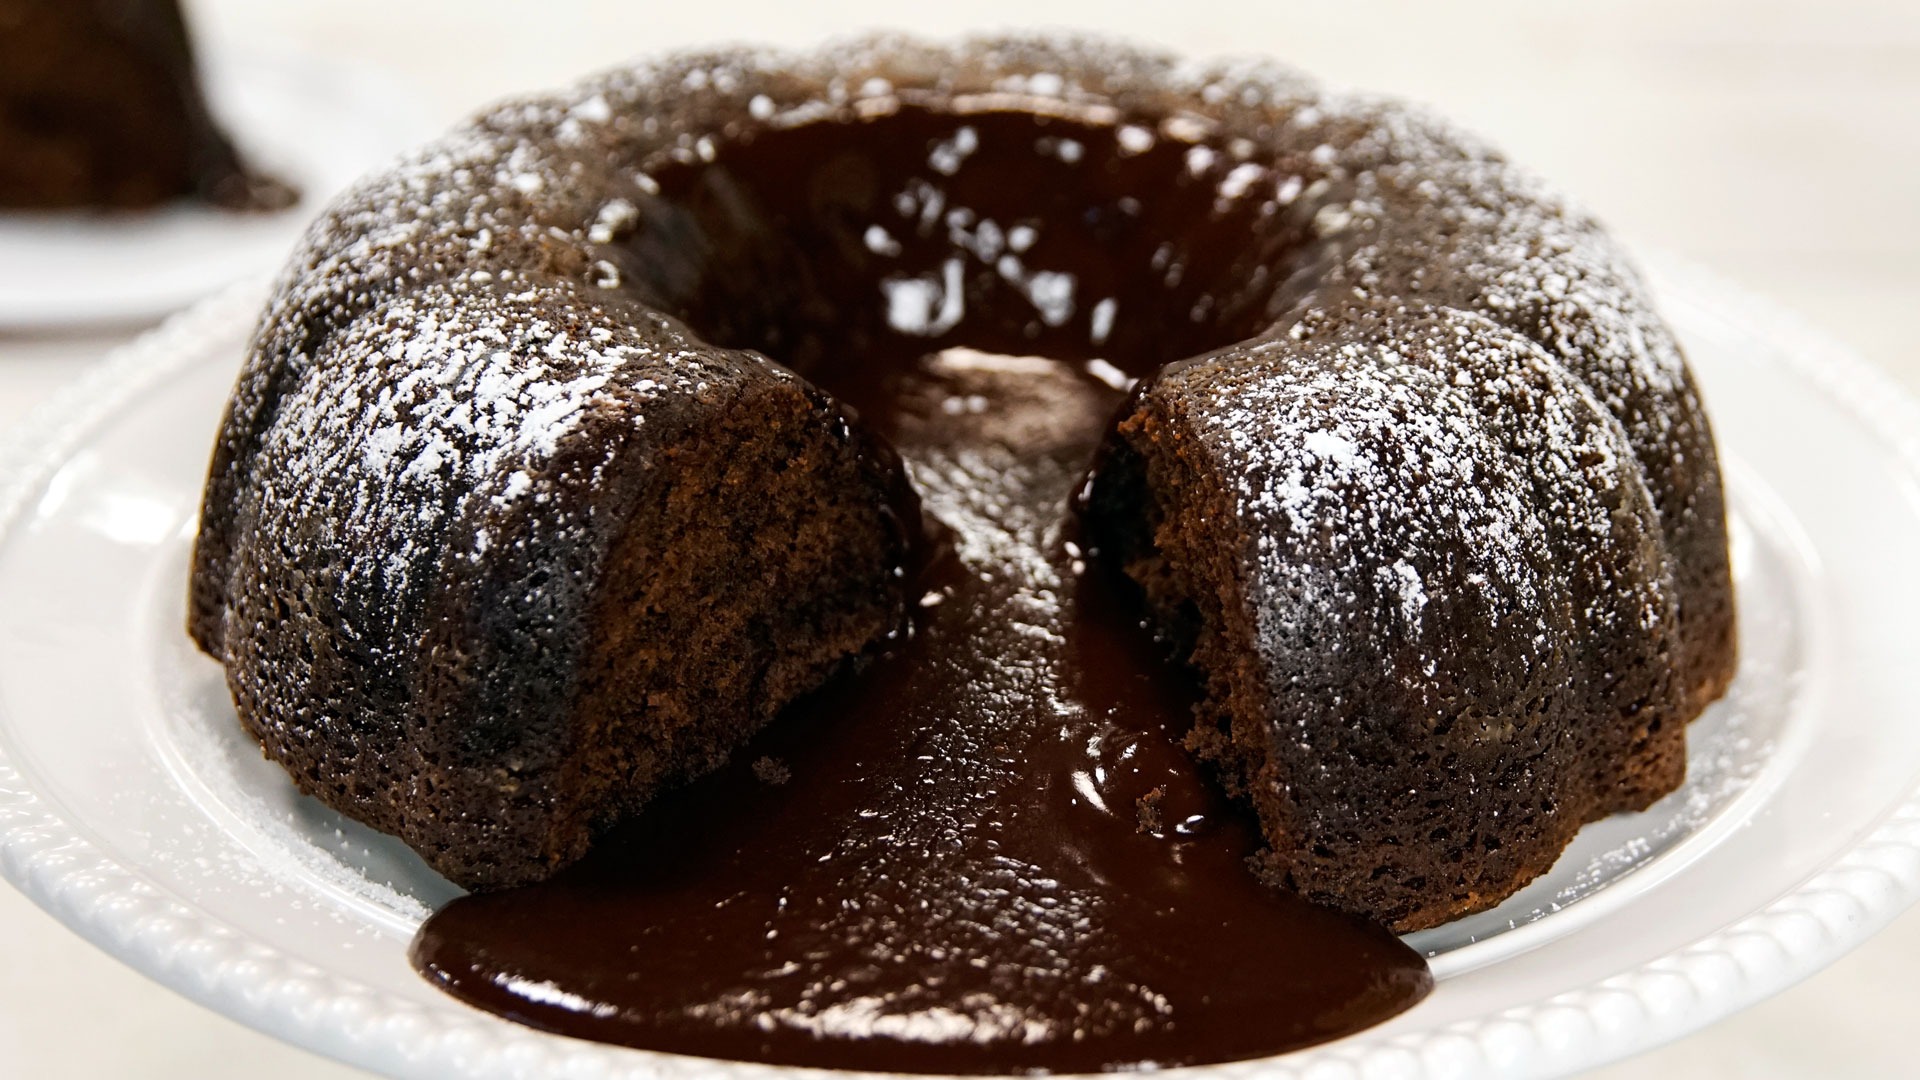 Hot Chocolate Lava Cake With Raspberry Sauce | Recipes